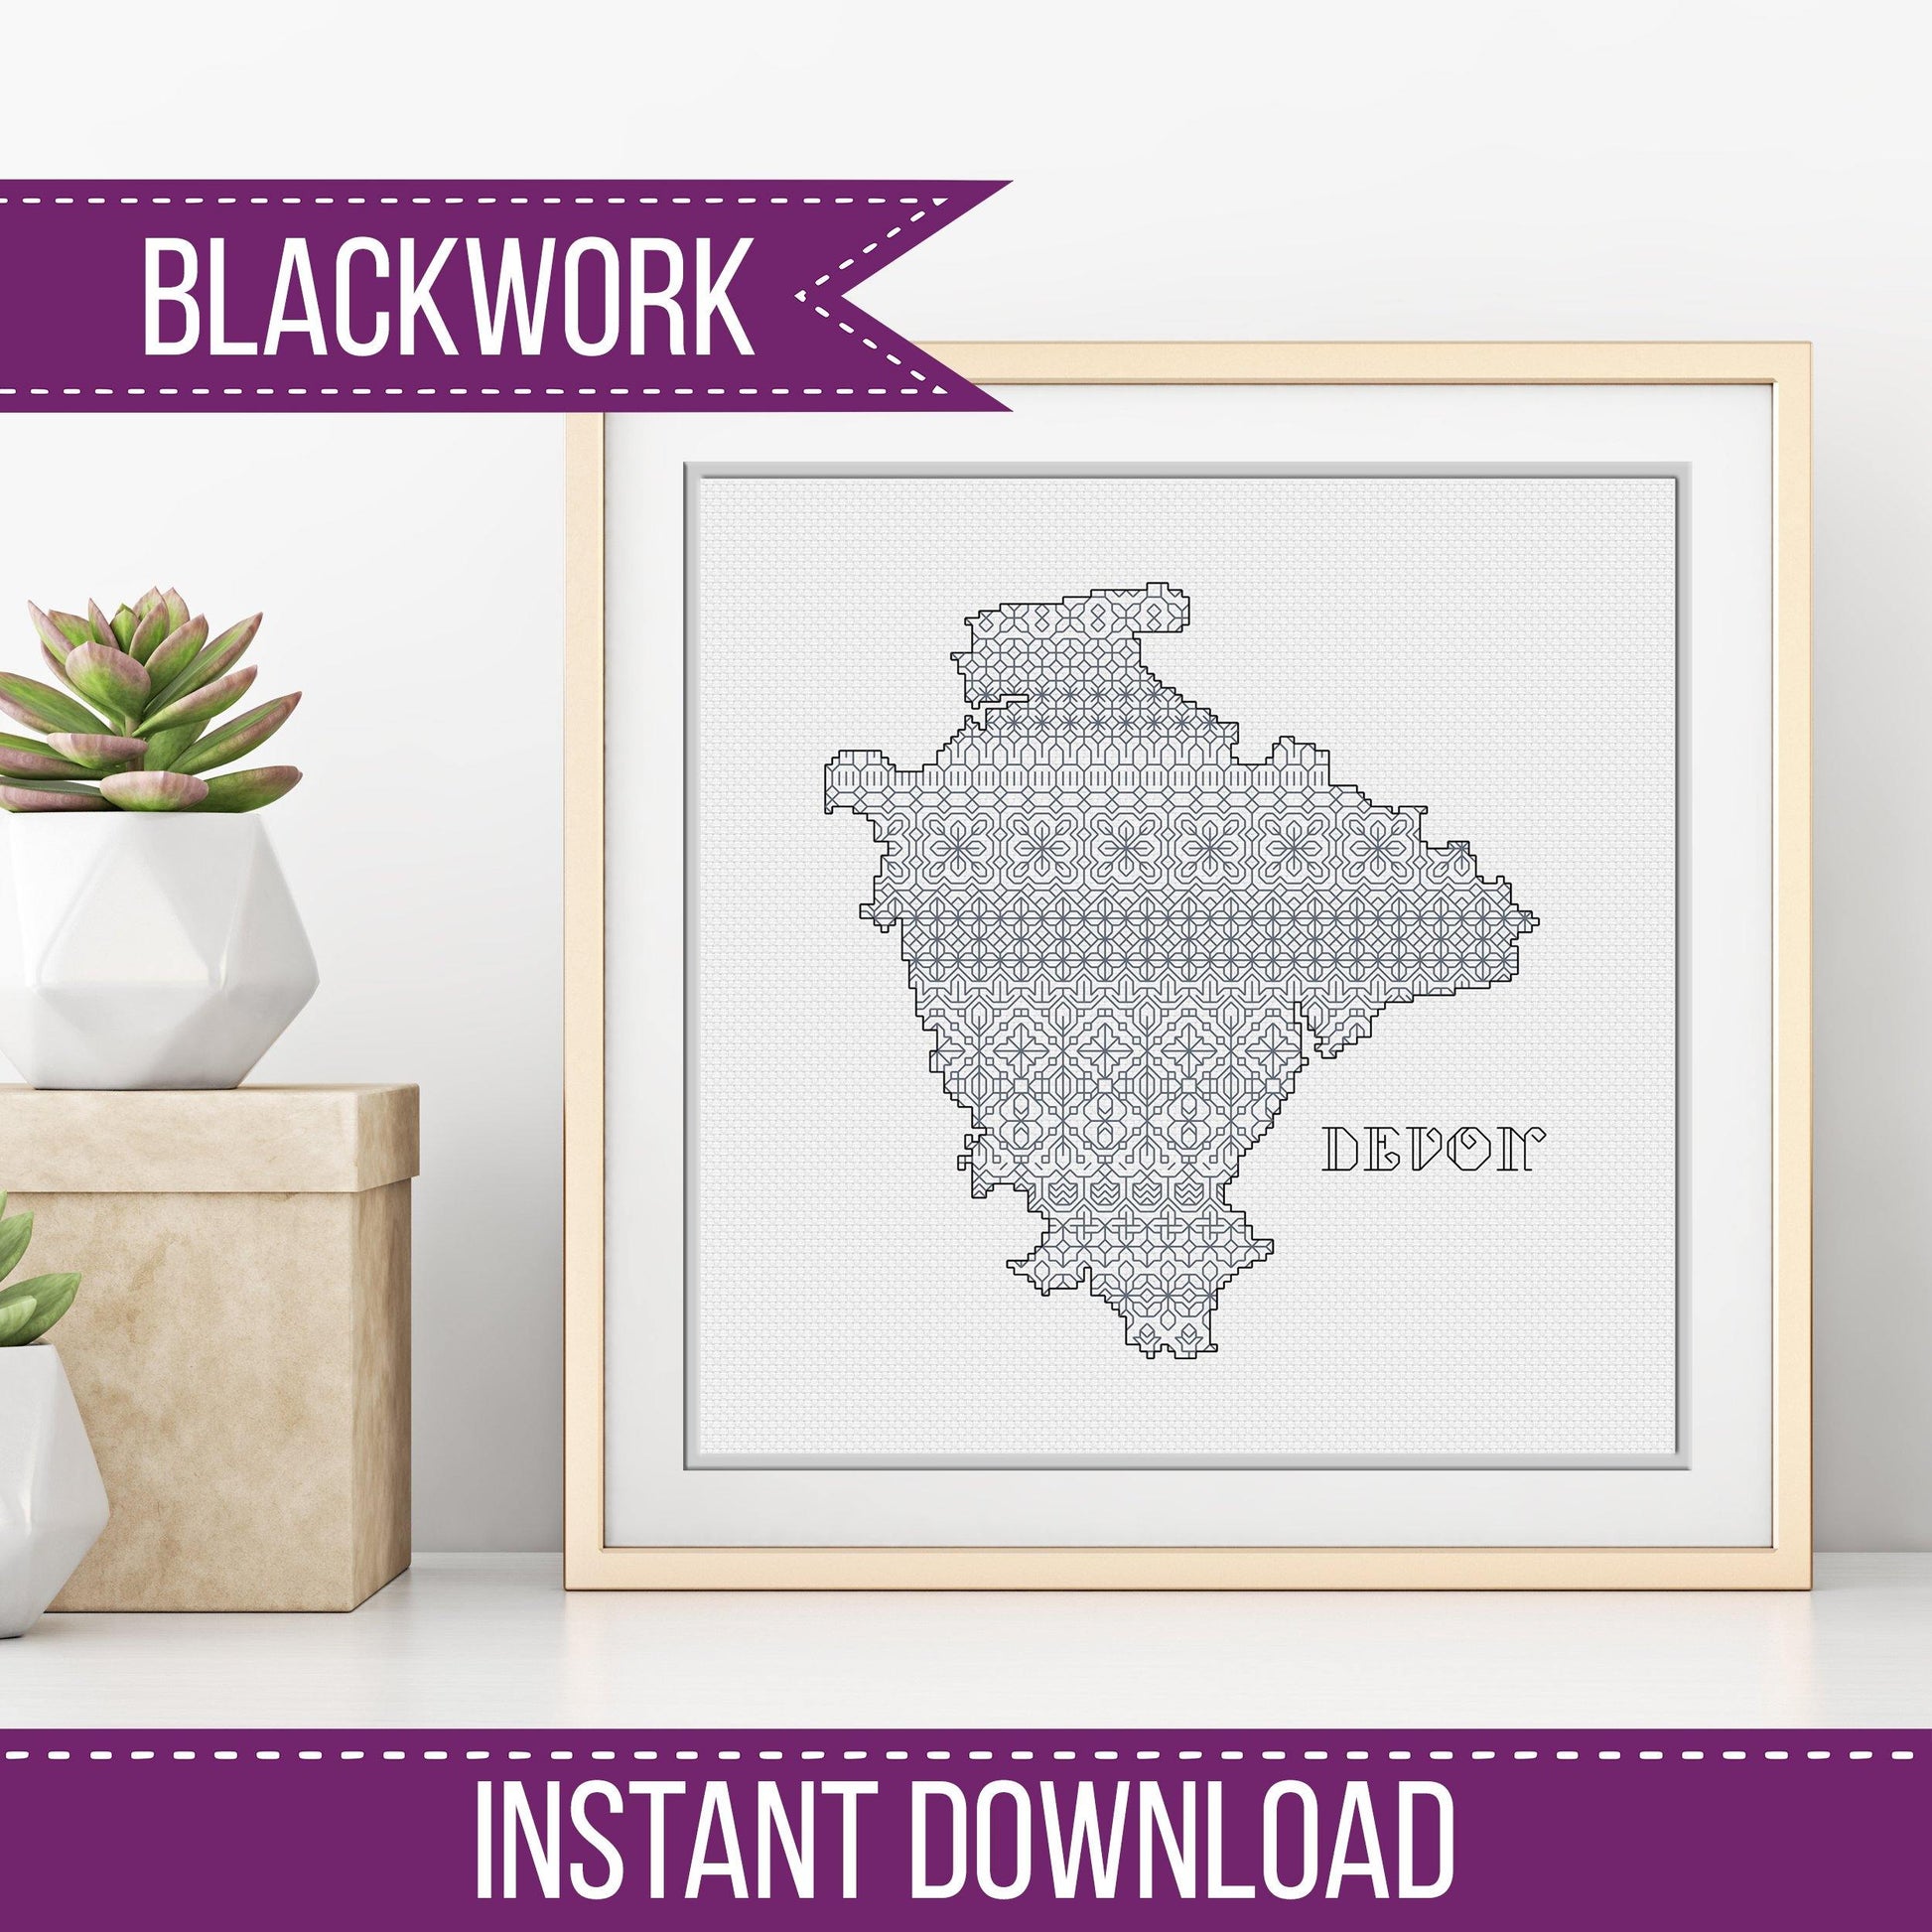 Devon Blackwork - Blackwork Patterns & Cross Stitch by Peppermint Purple